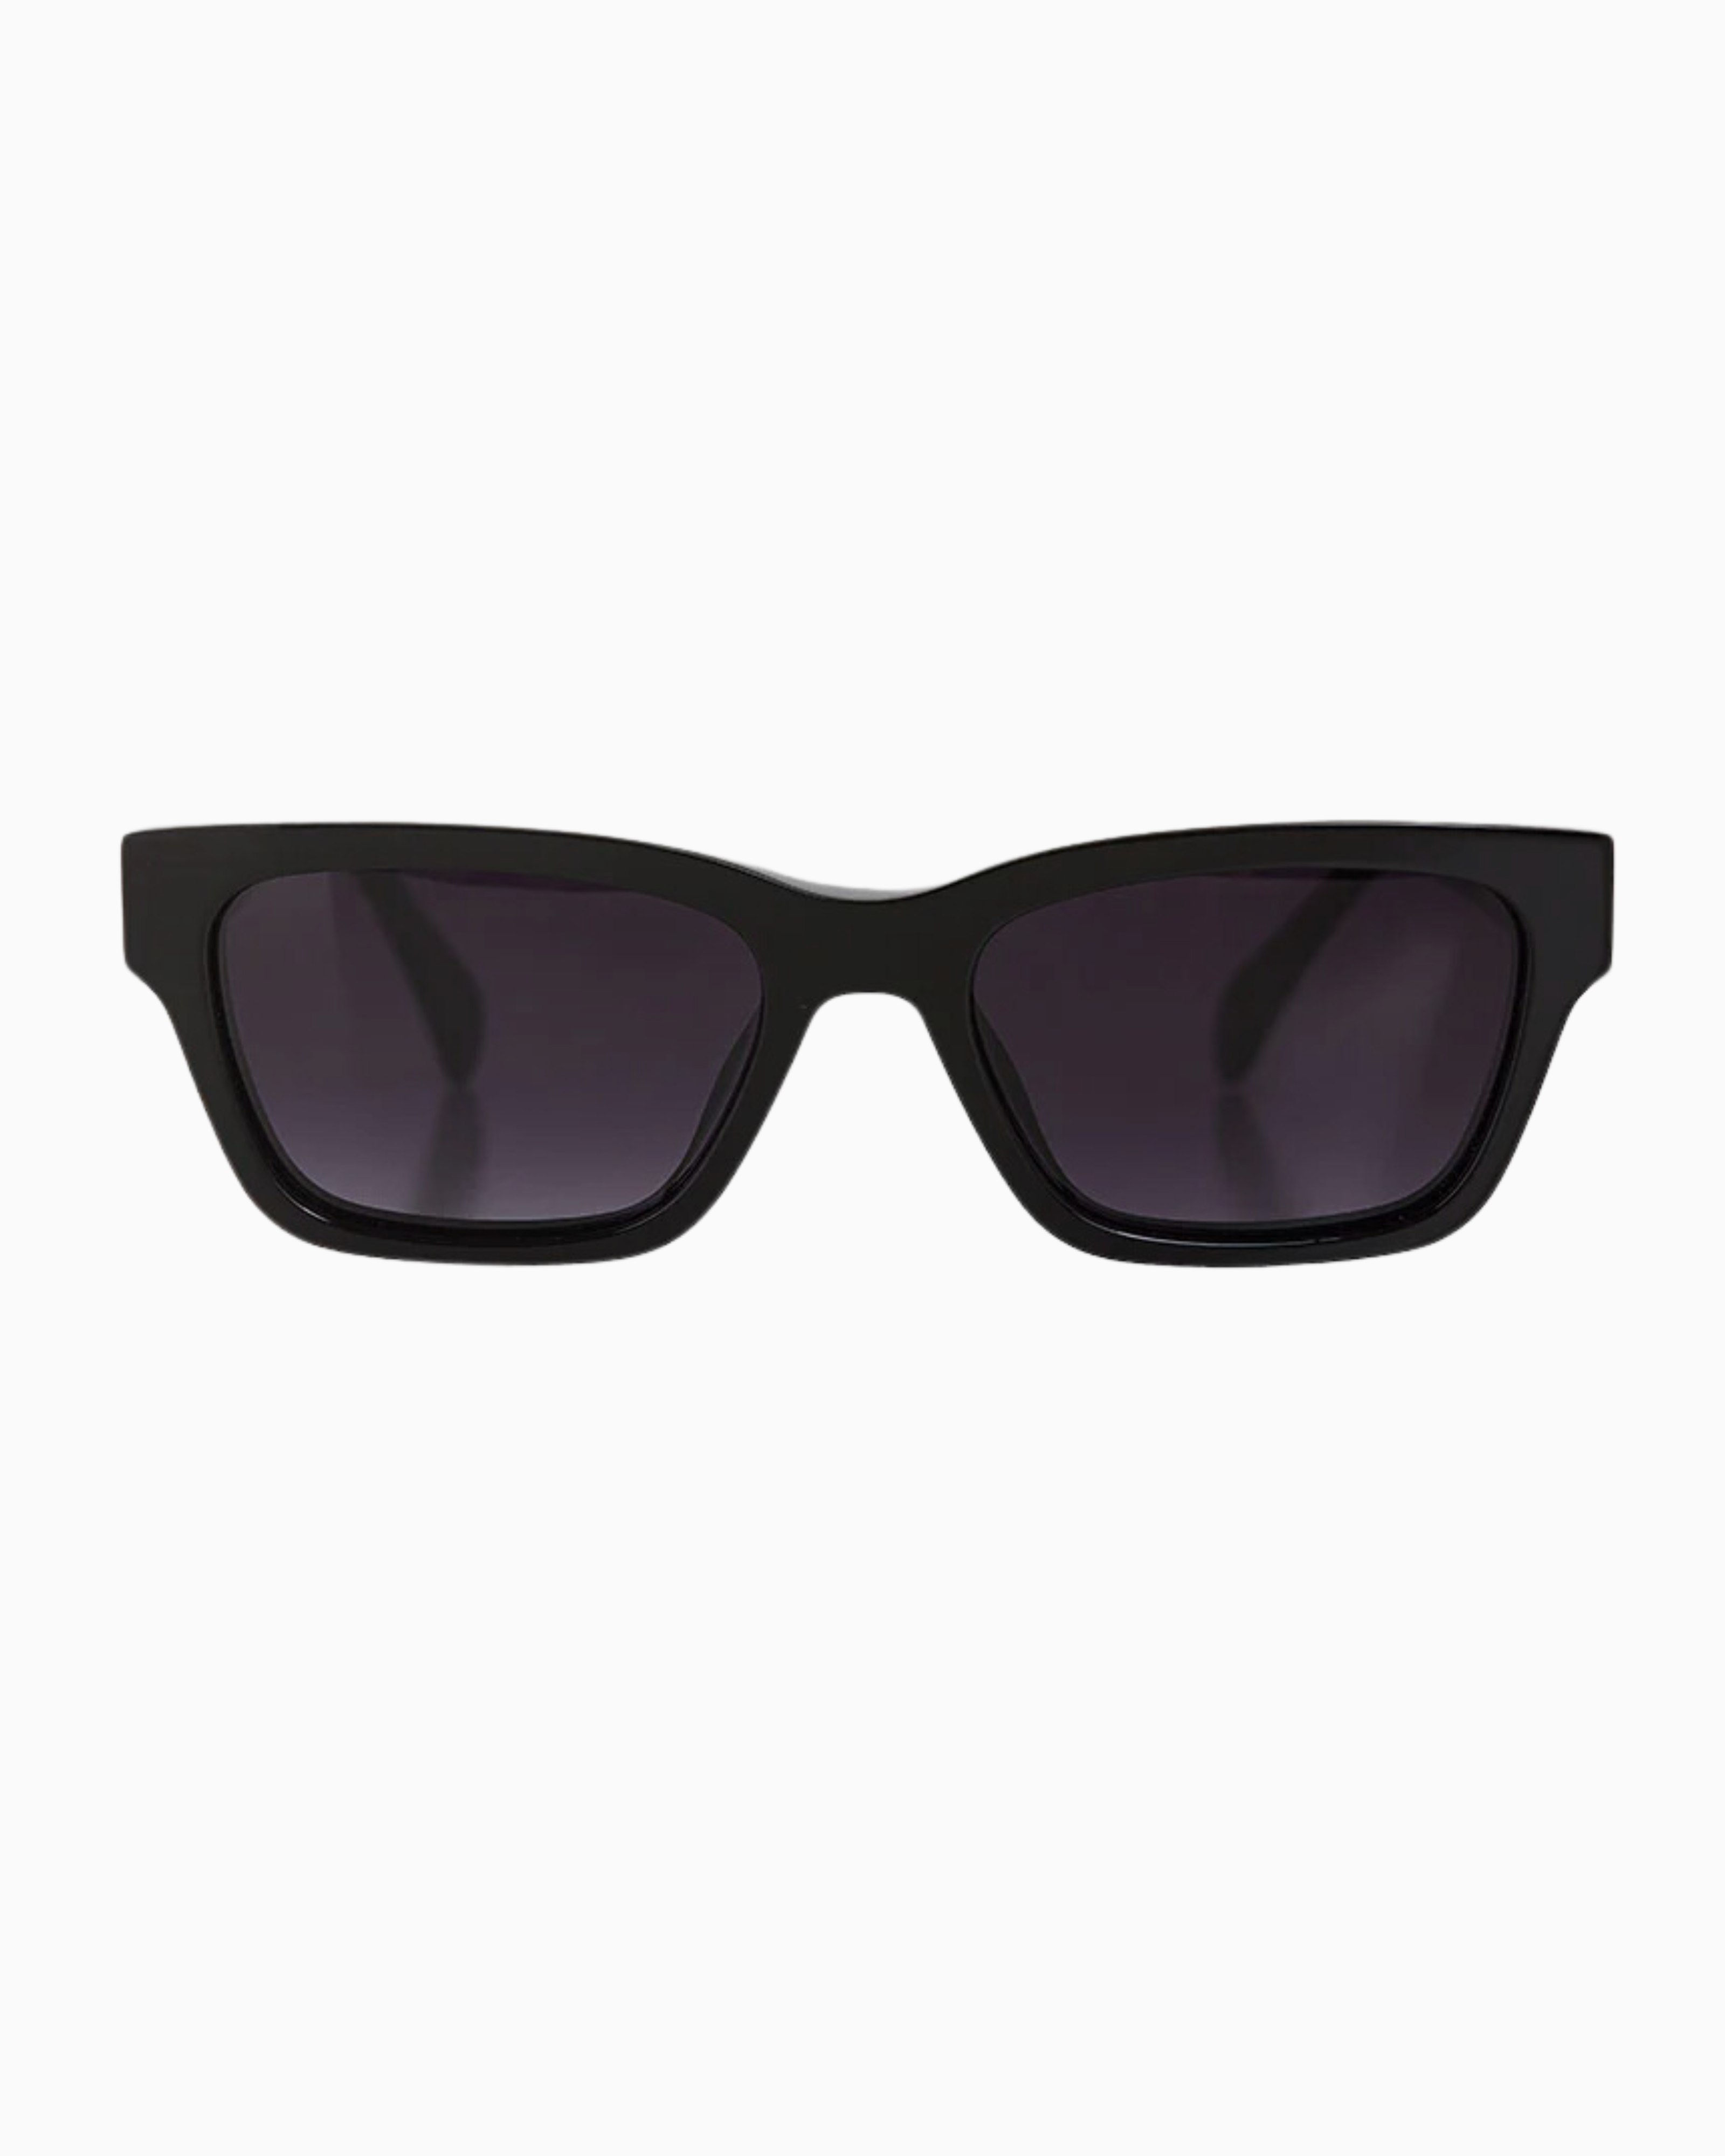 Anine Bing Daria Sunglasses in Black